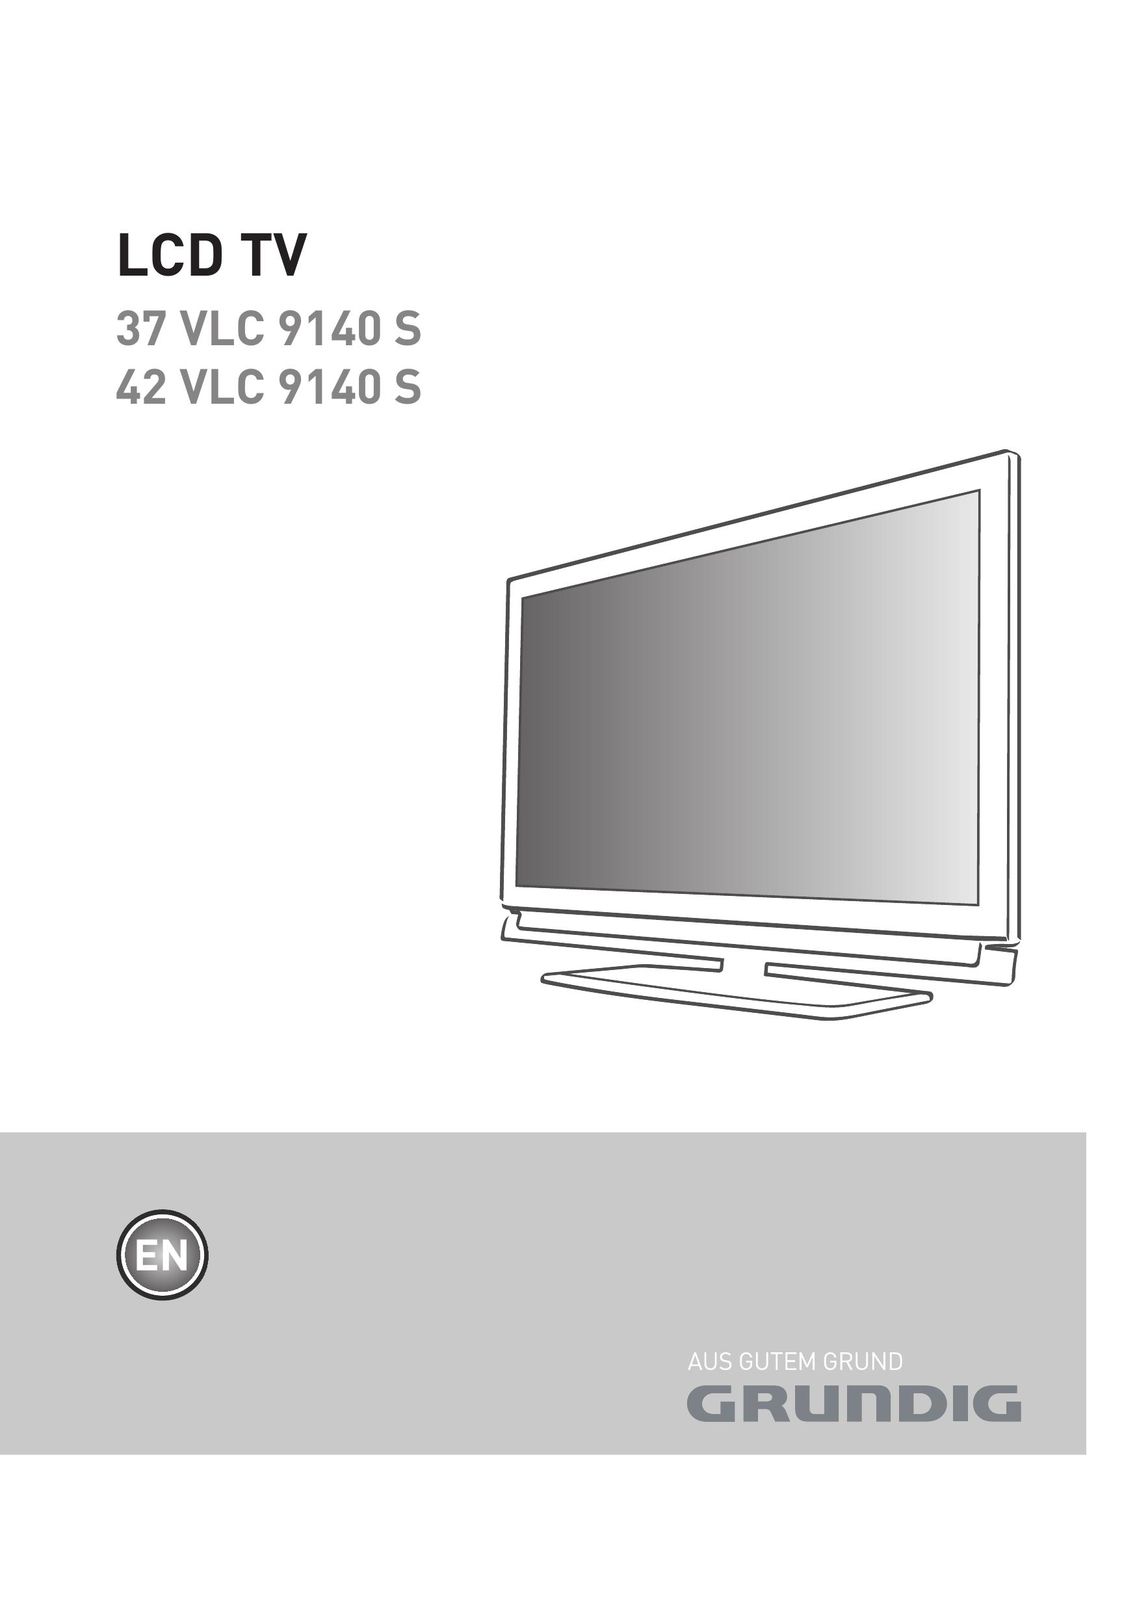 Grundig 42 VLS 9140 S Flat Panel Television User Manual